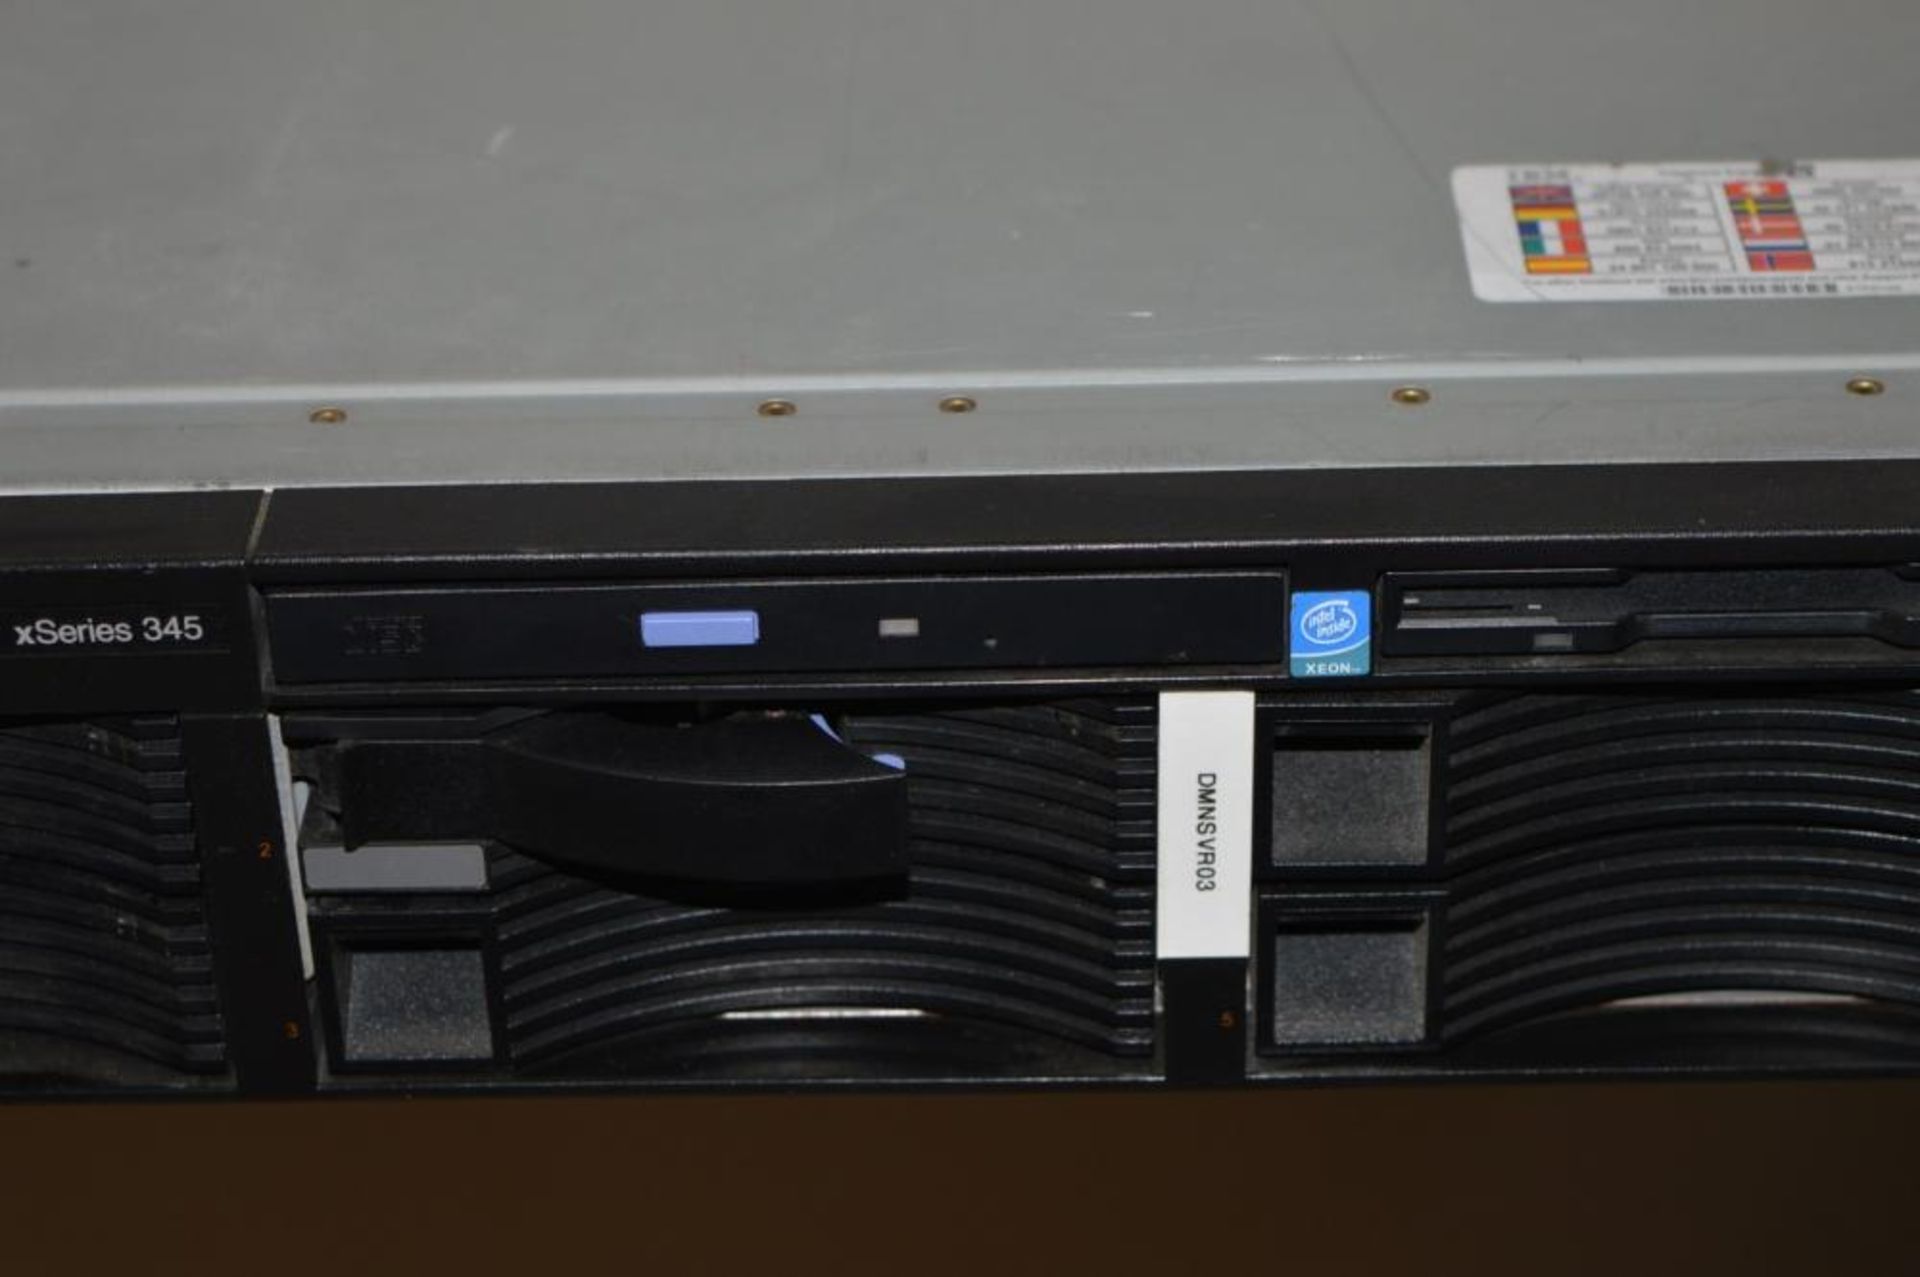 1 x IBM xSeries 345 Server - Includes Dual Xeon Processors, 1gb Ram, Raid Card - Hard Disk Drives - Image 3 of 6